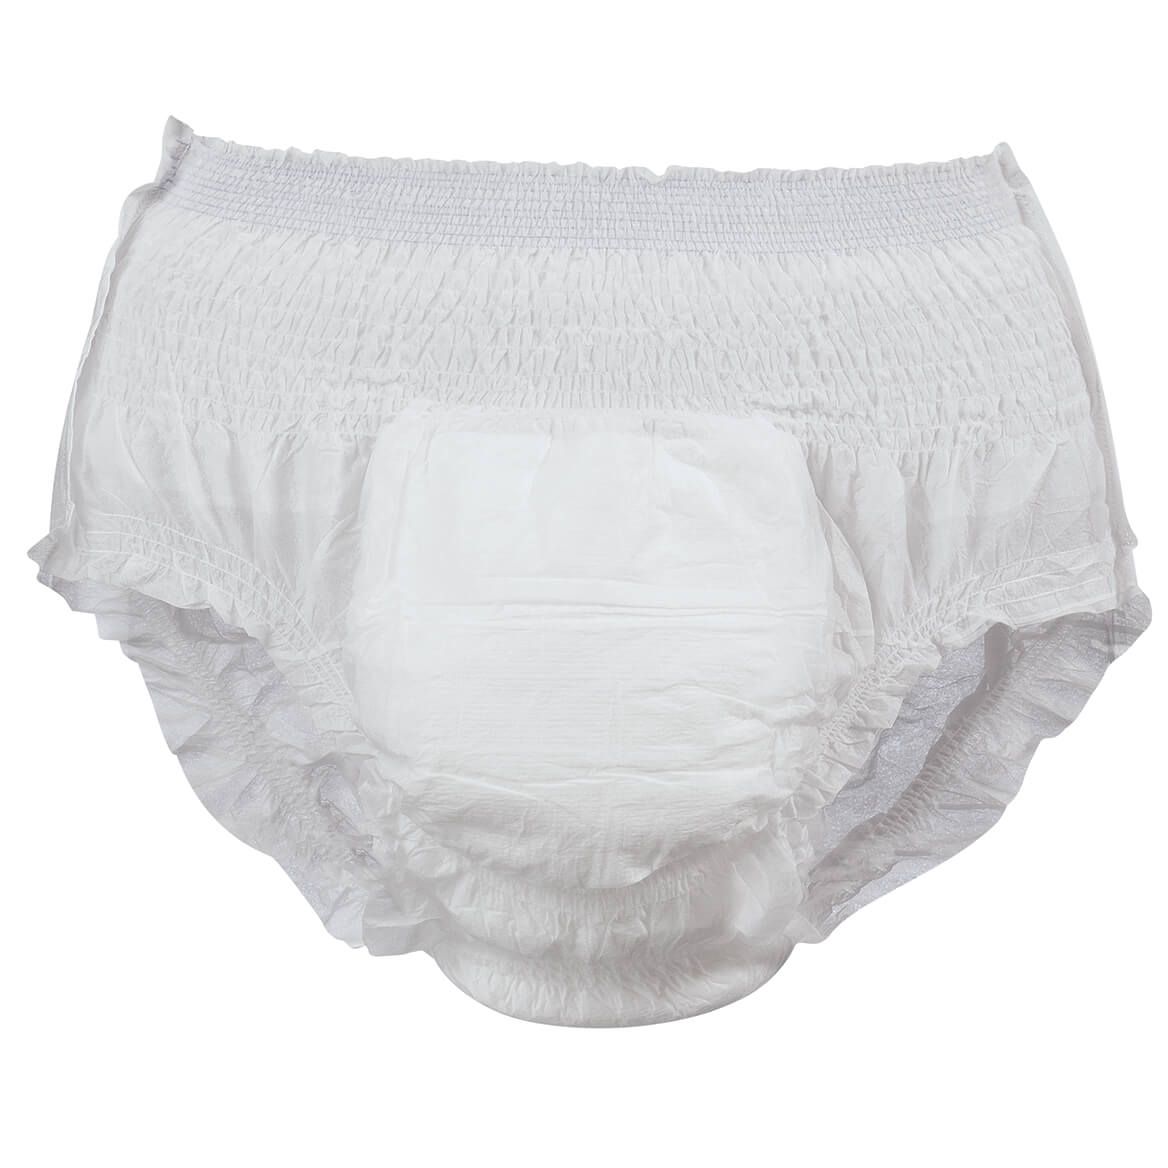 Wellness Absorbent Incontinence Underwear – Unisex – 16-Pack